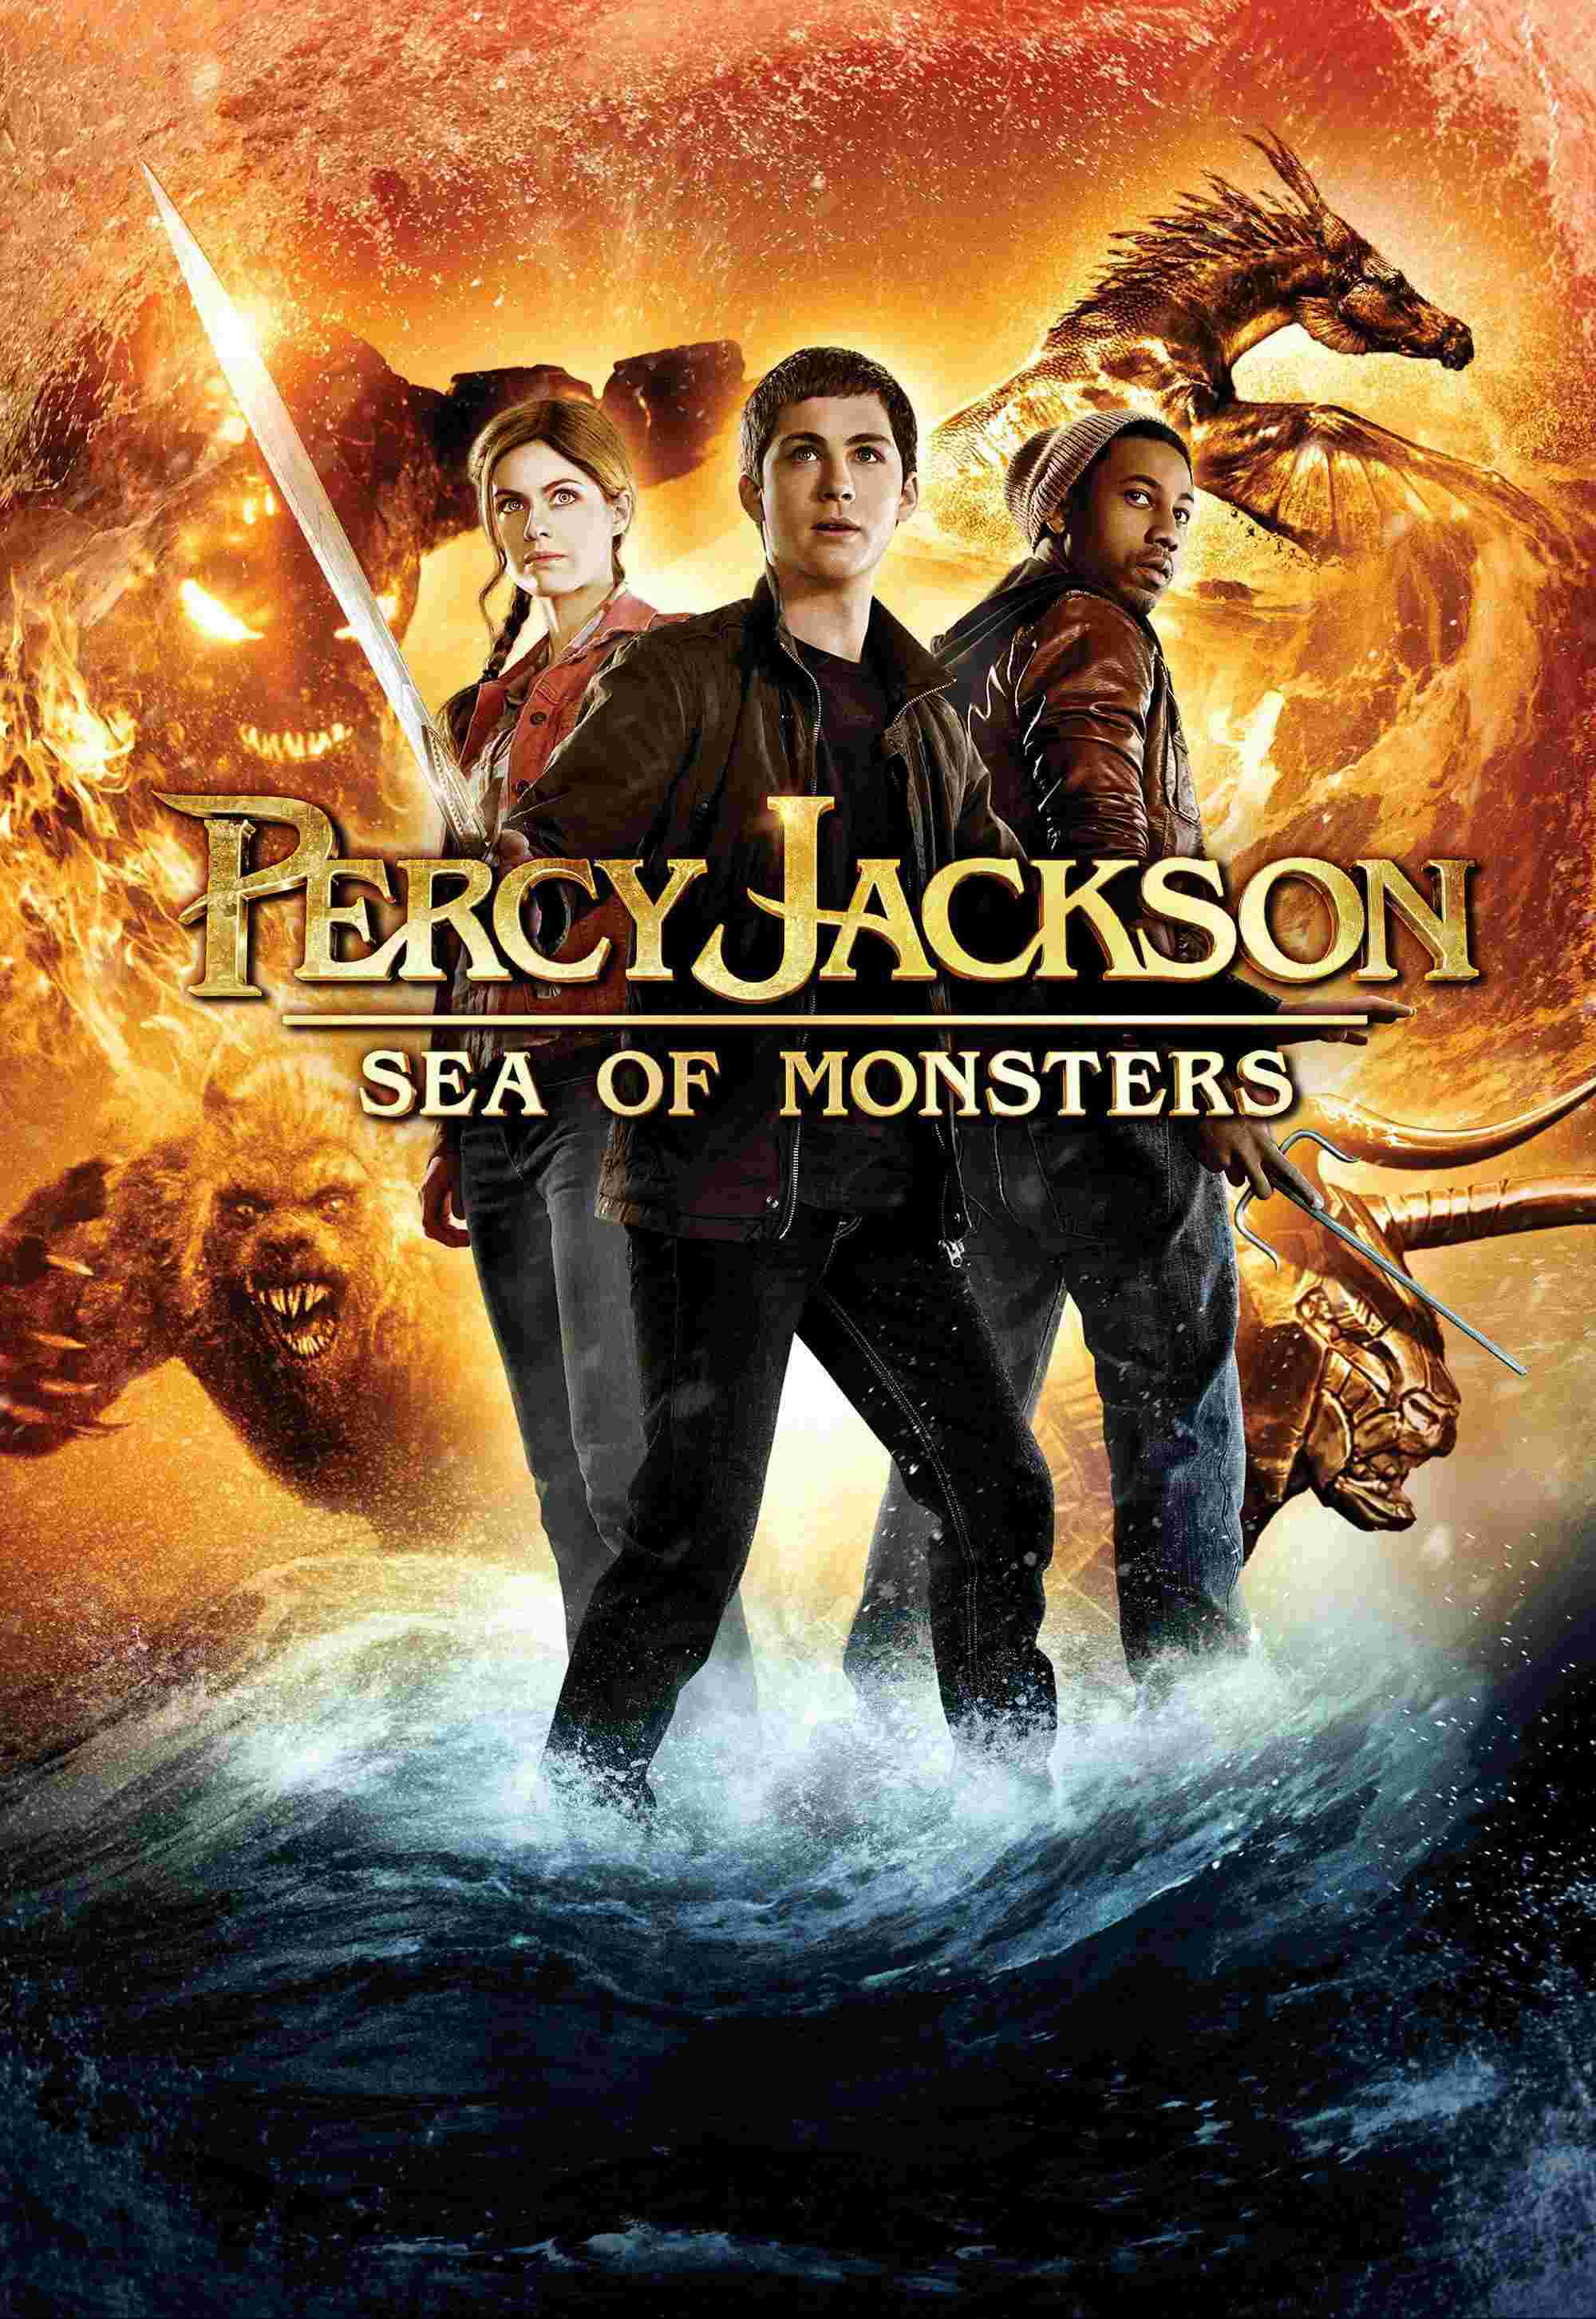 Percy Jackson: Sea of Monsters (2013) Logan Lerman